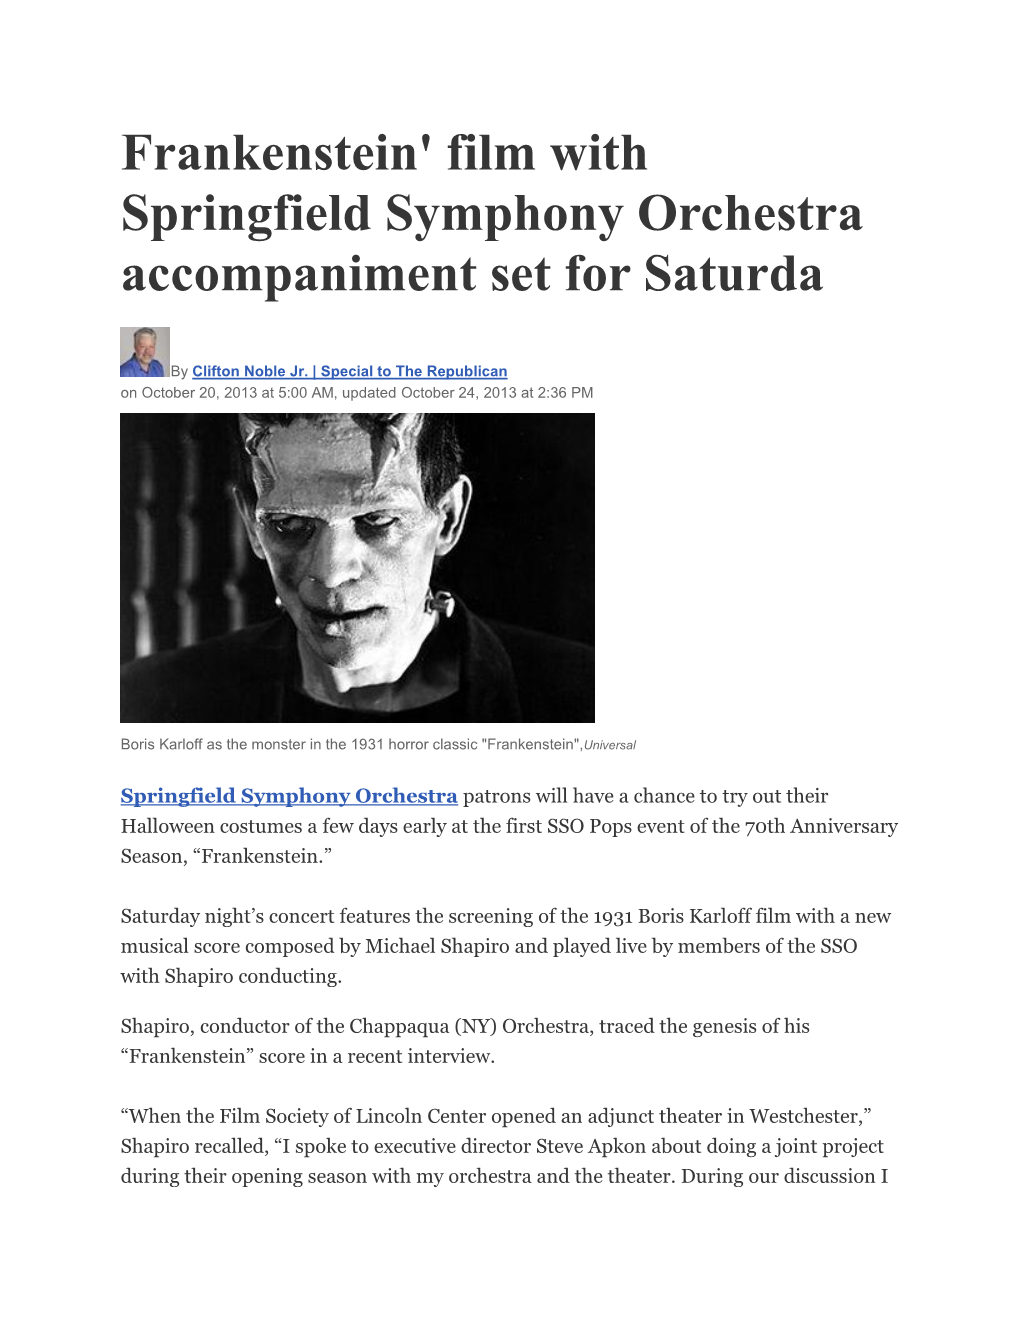 Frankenstein' Film with Springfield Symphony Orchestra Accompaniment Set for Saturda